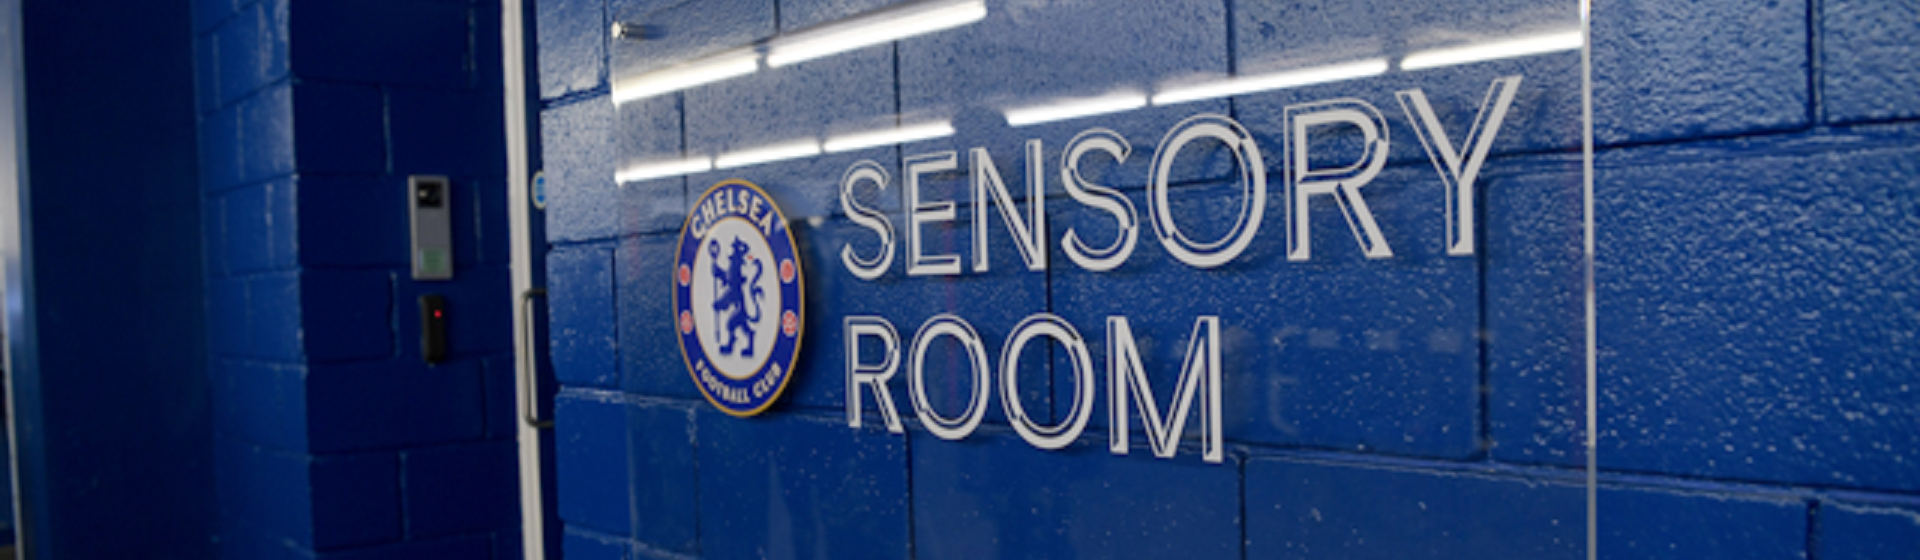 First sensory room - Chelsea Foundation